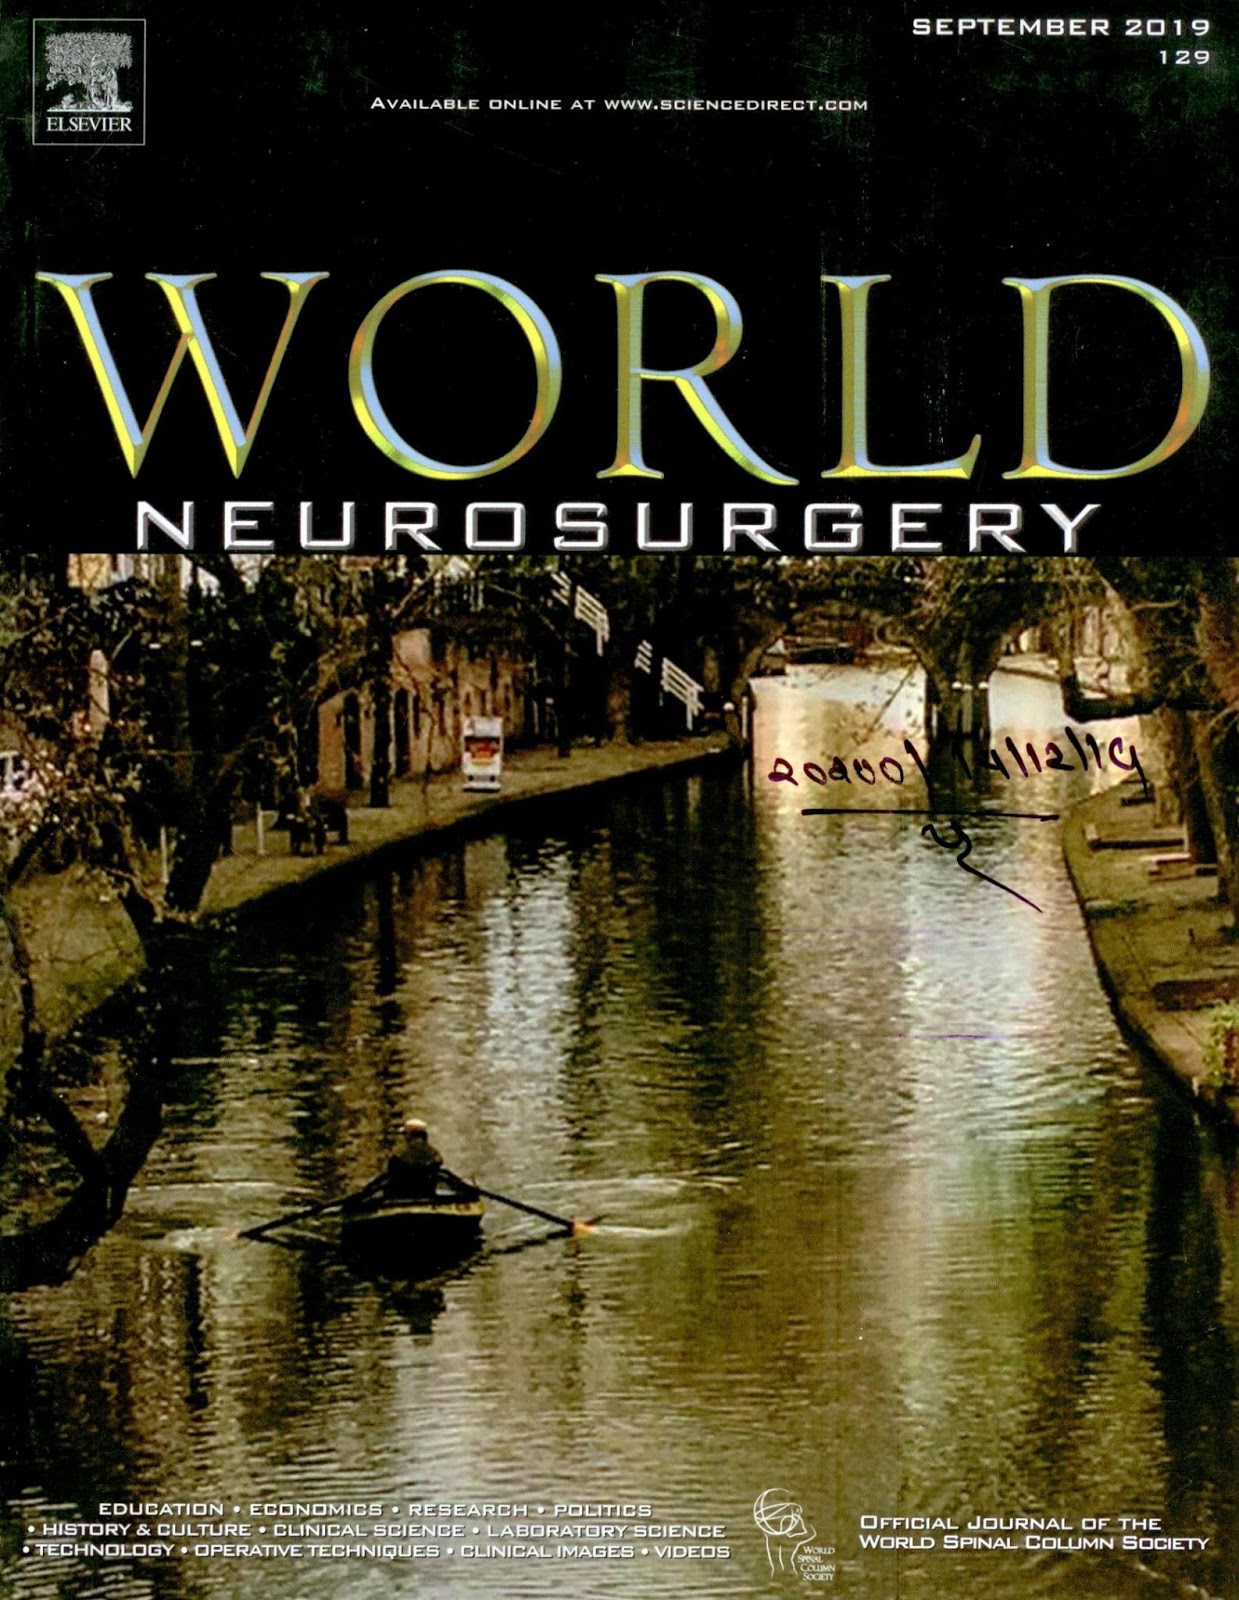 https://www.sciencedirect.com/journal/world-neurosurgery/vol/129/suppl/C